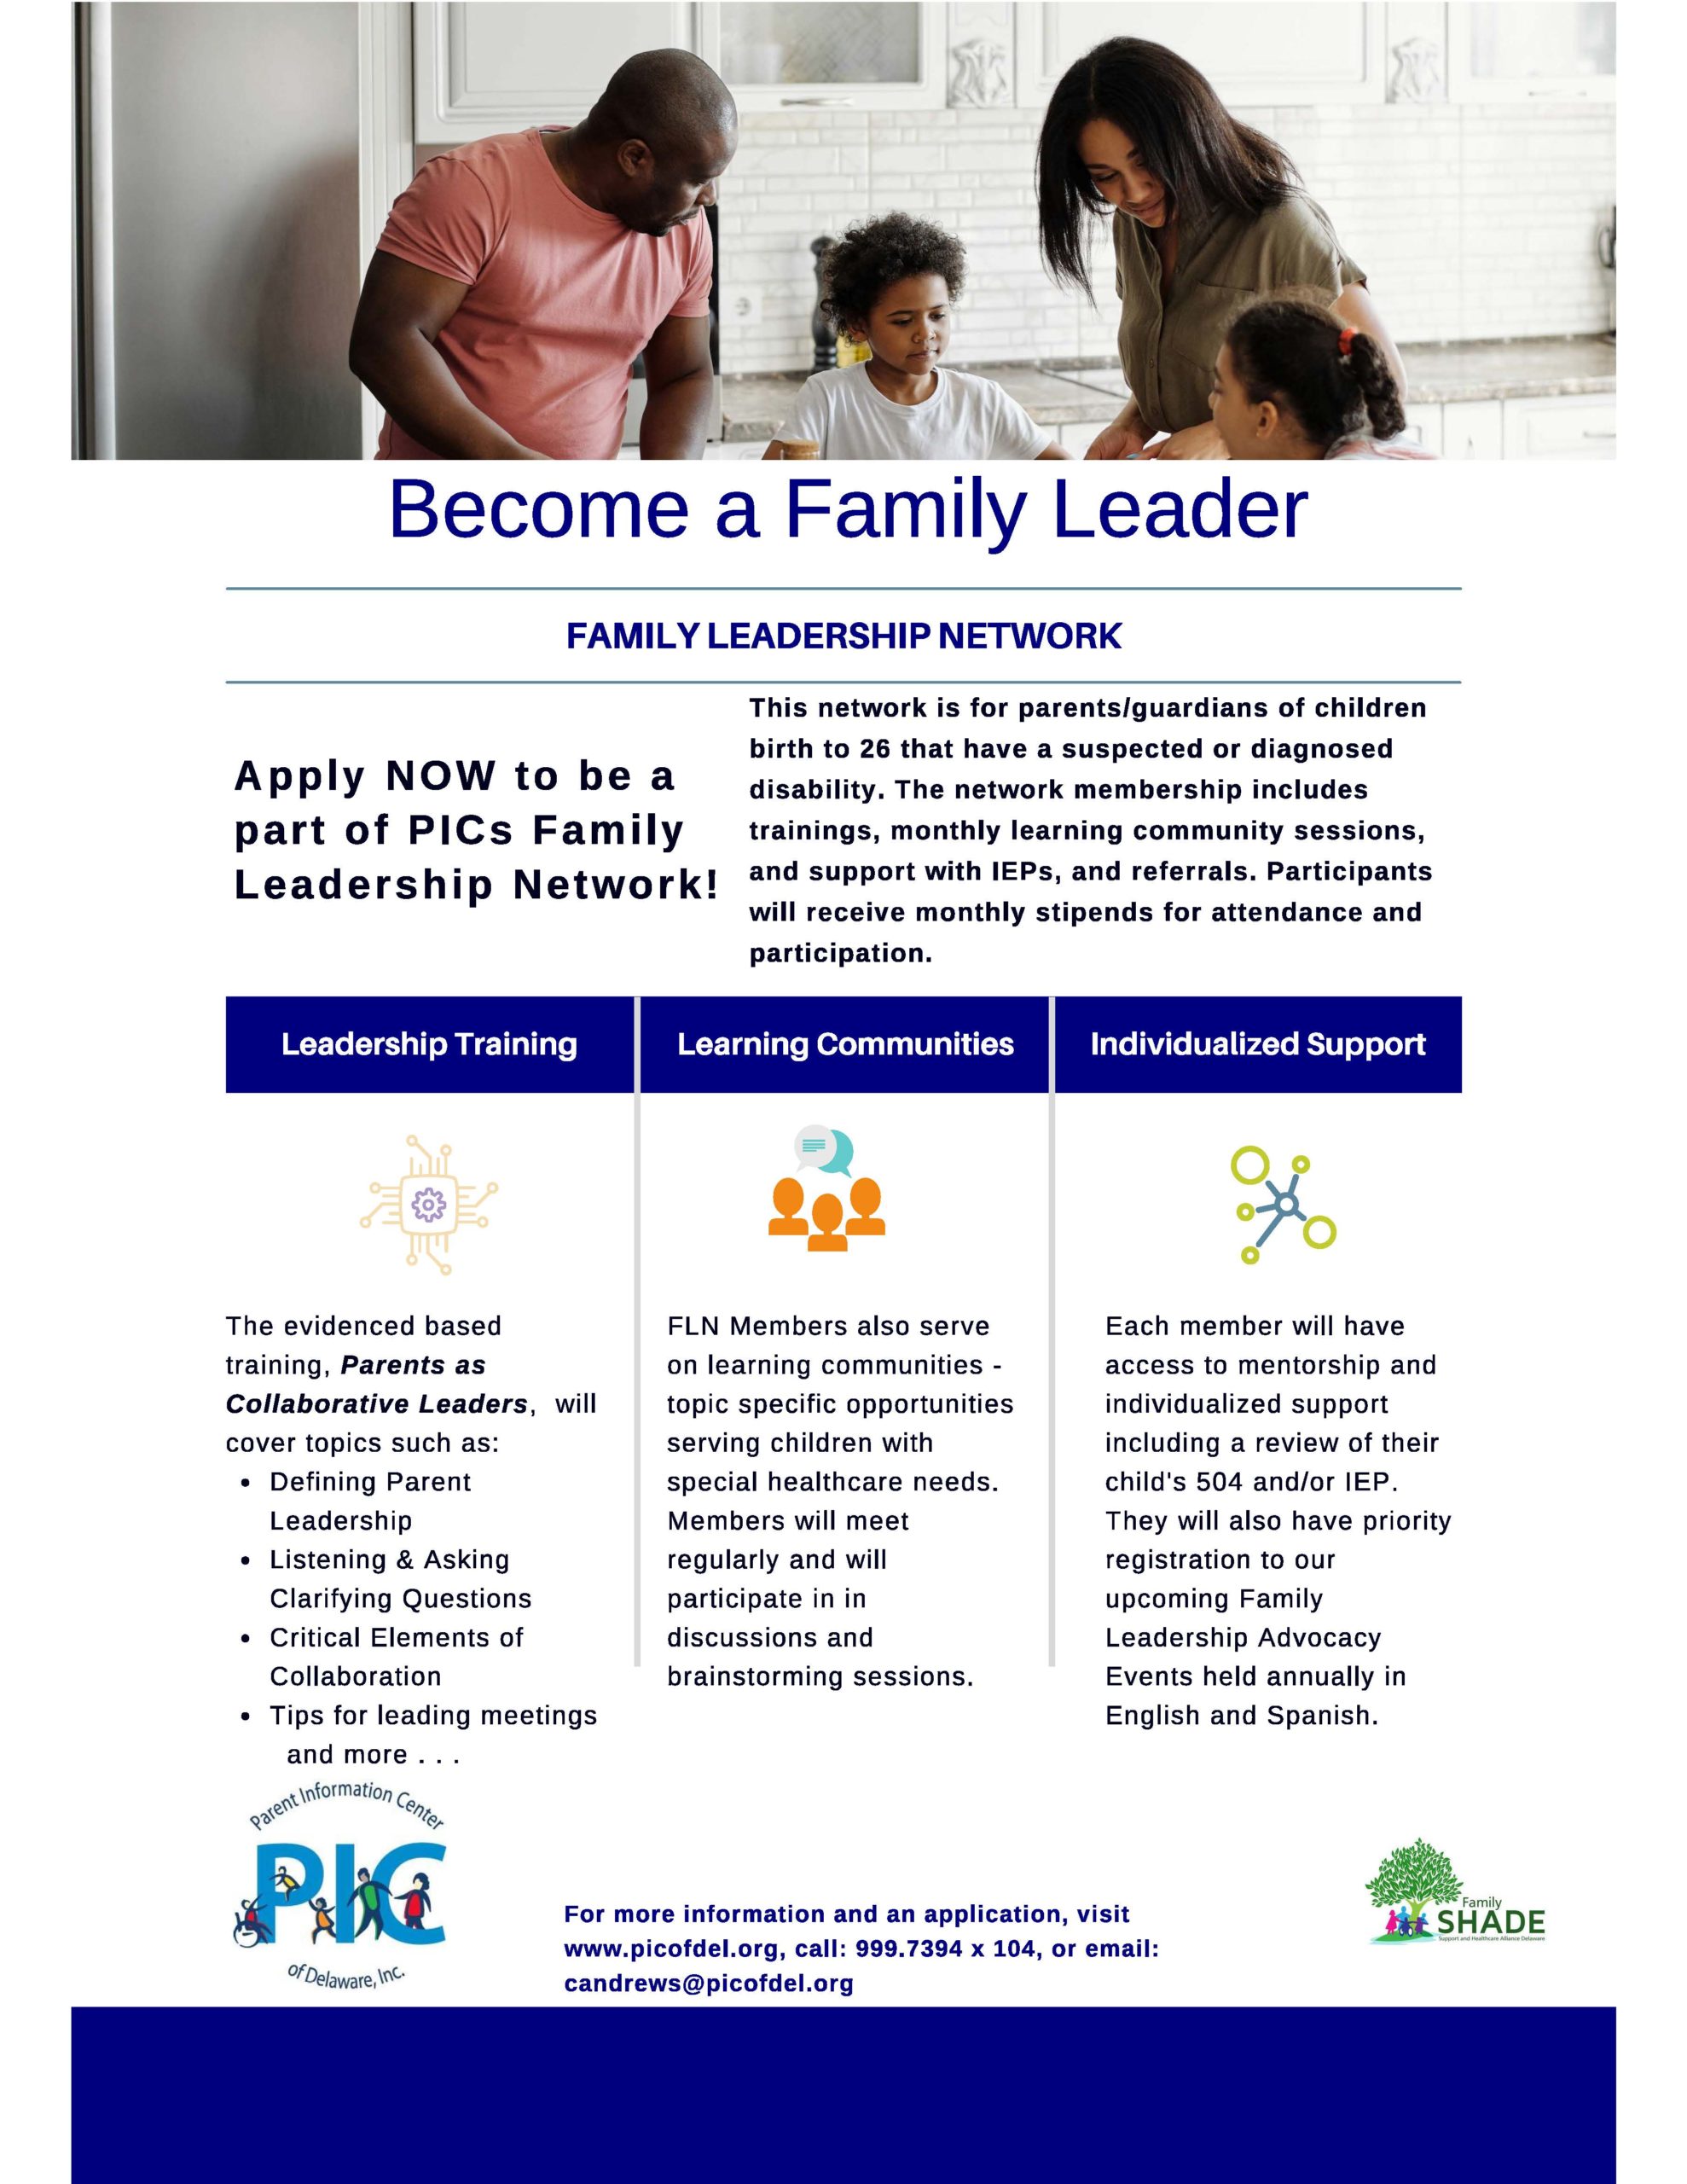 Family Leadership Network